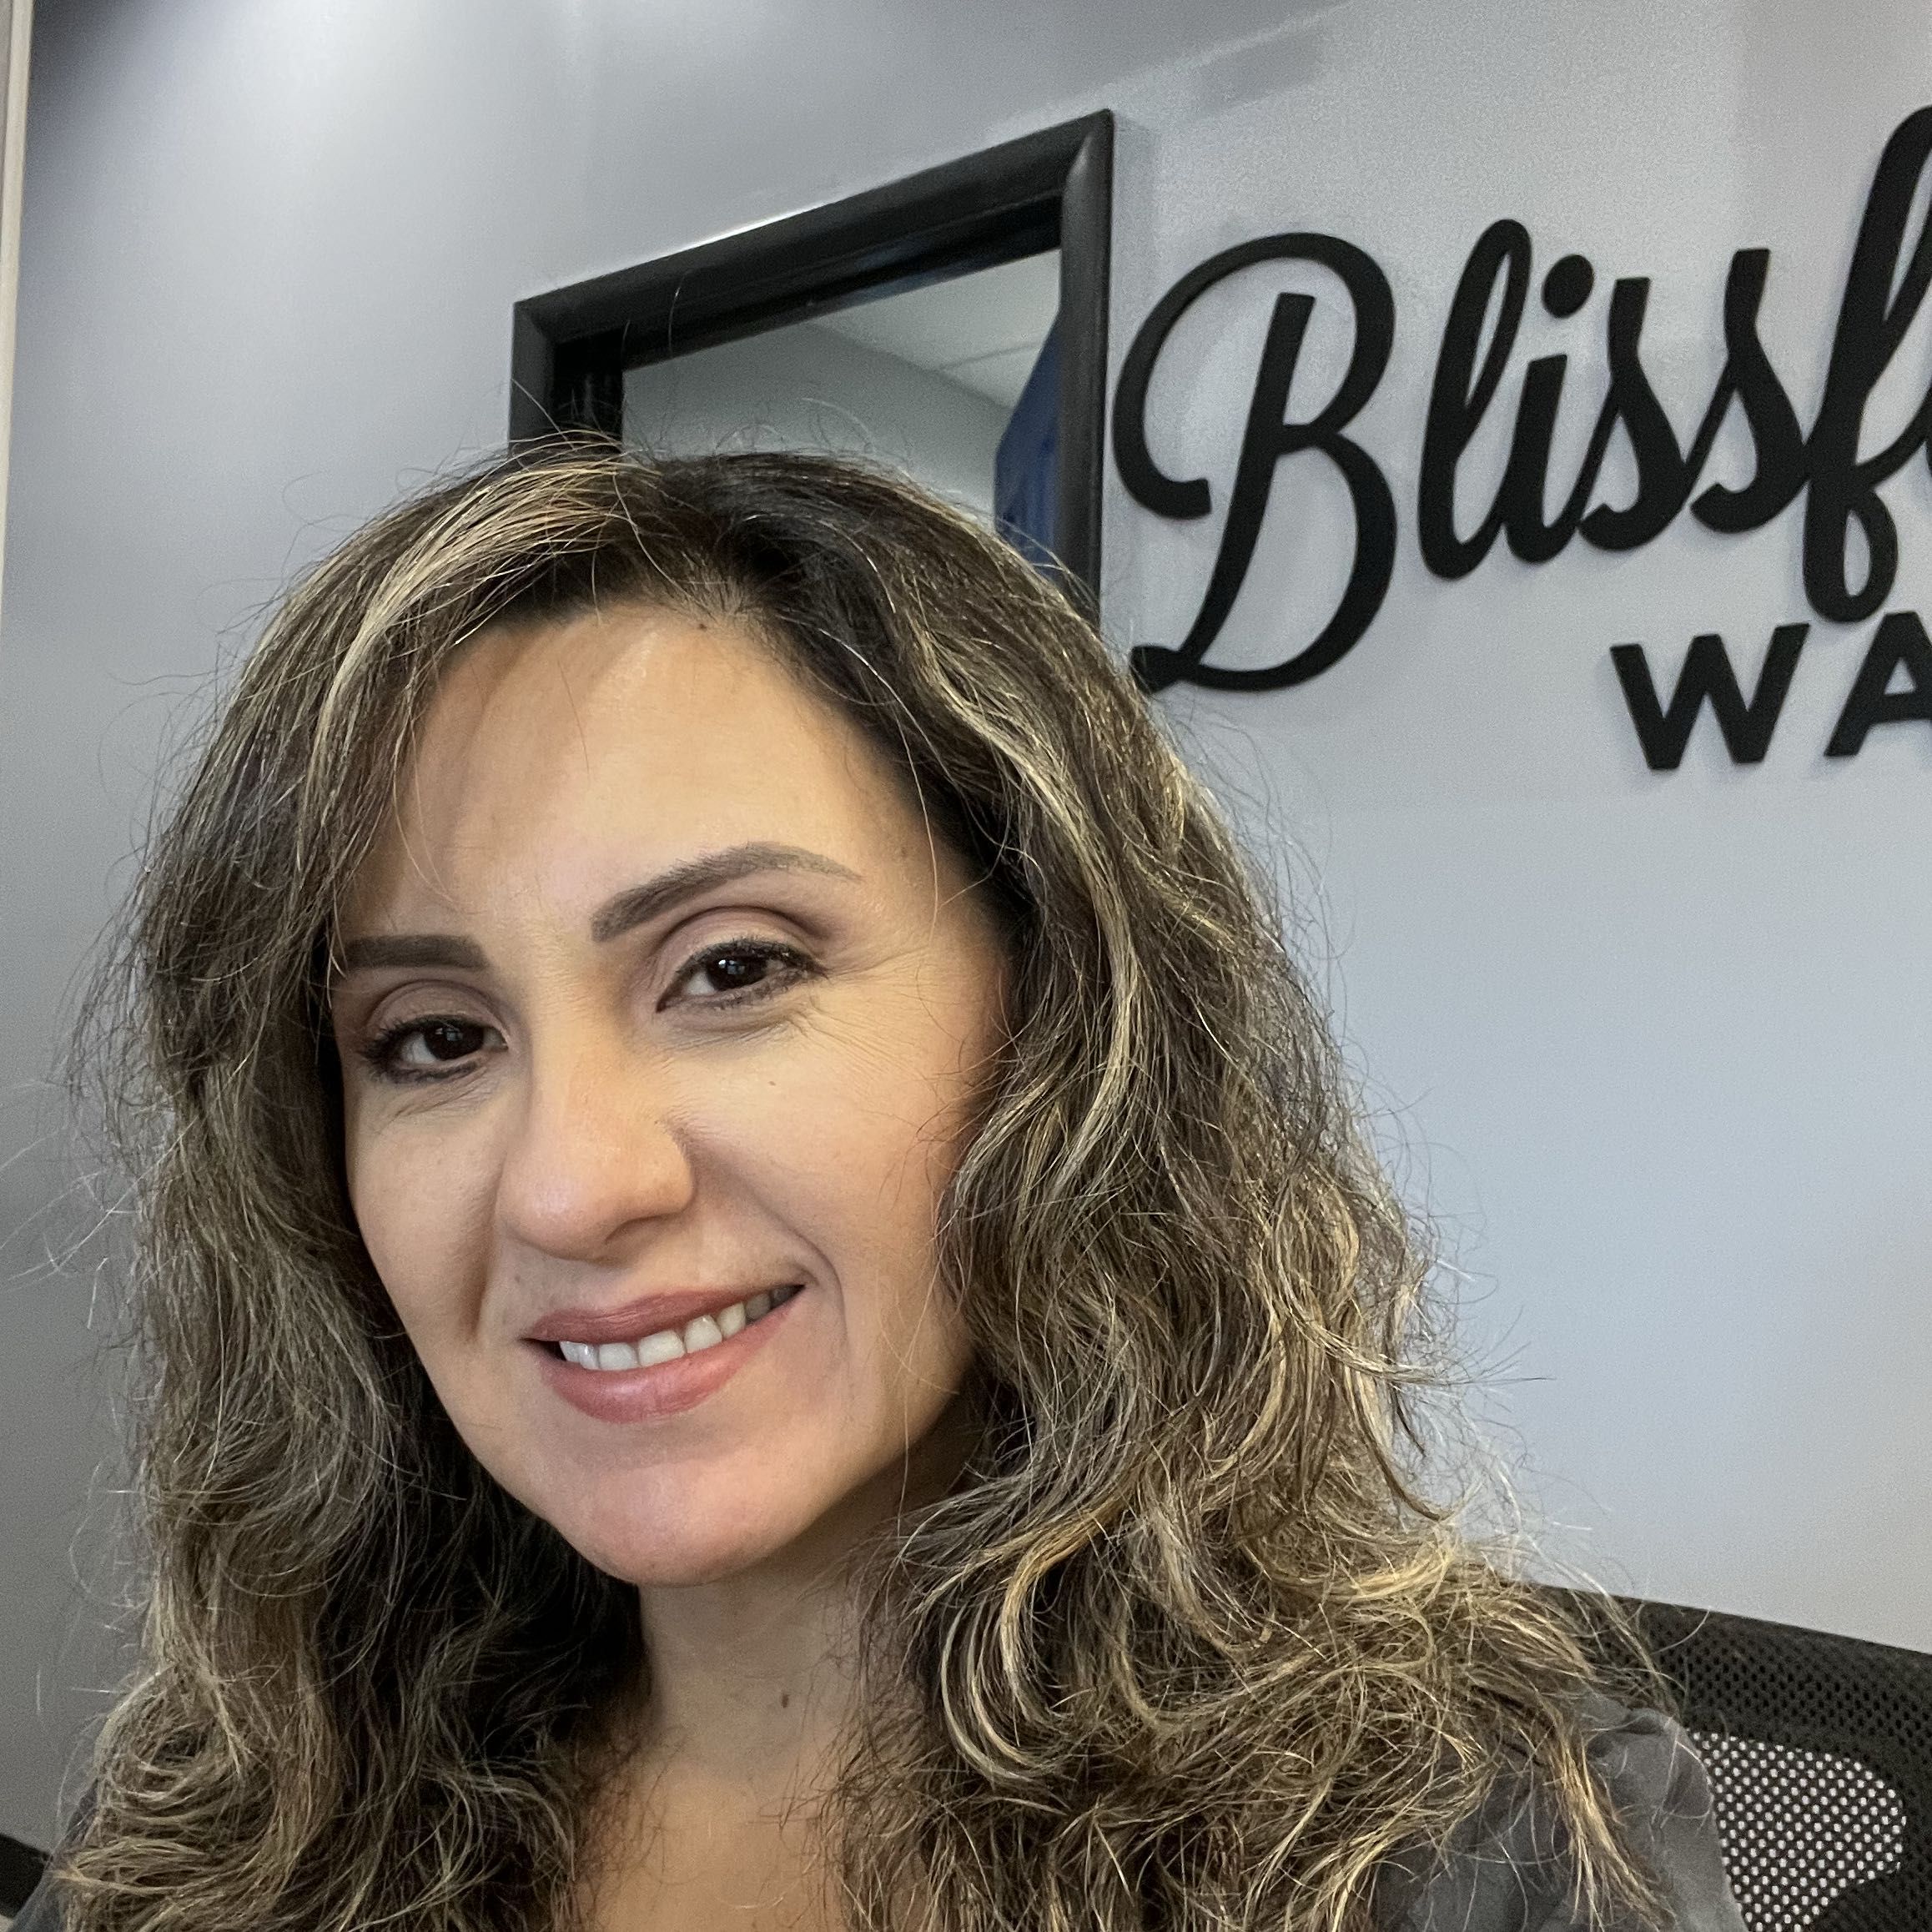 Blissful Wax Bar - Waxing Hair Removal Service in Tenafly